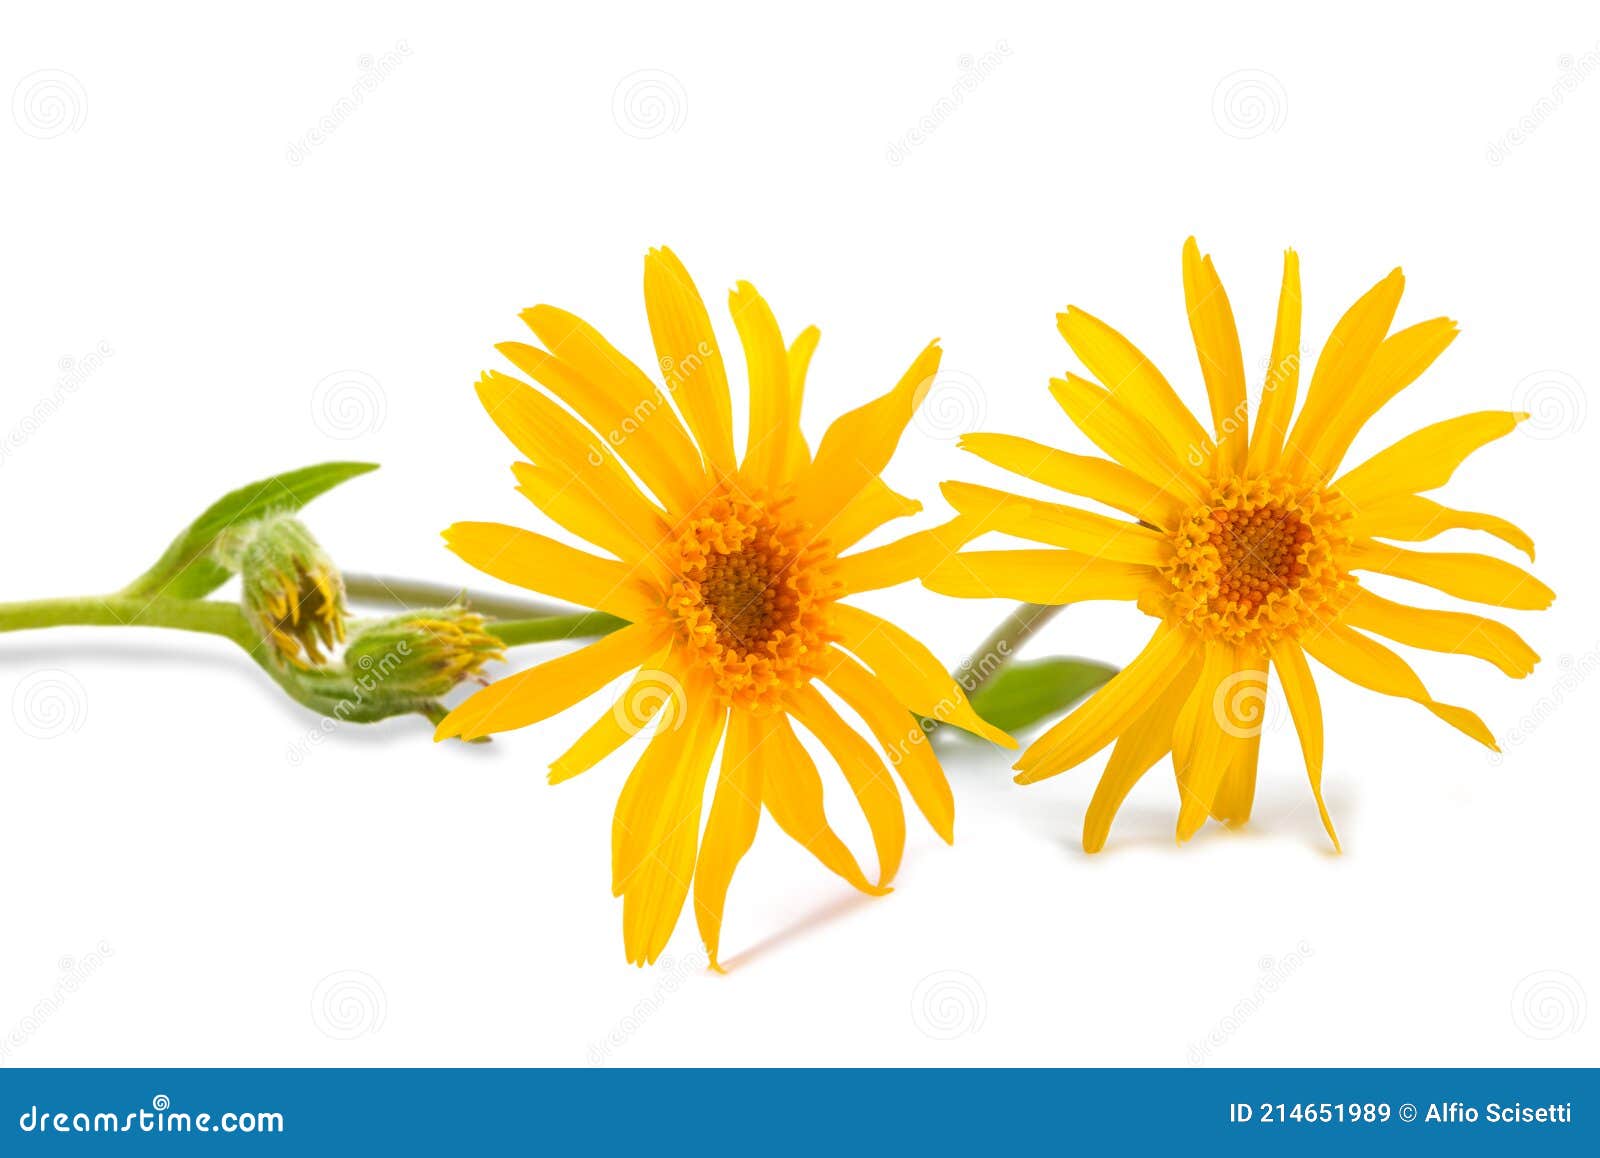 arnica montana flowers